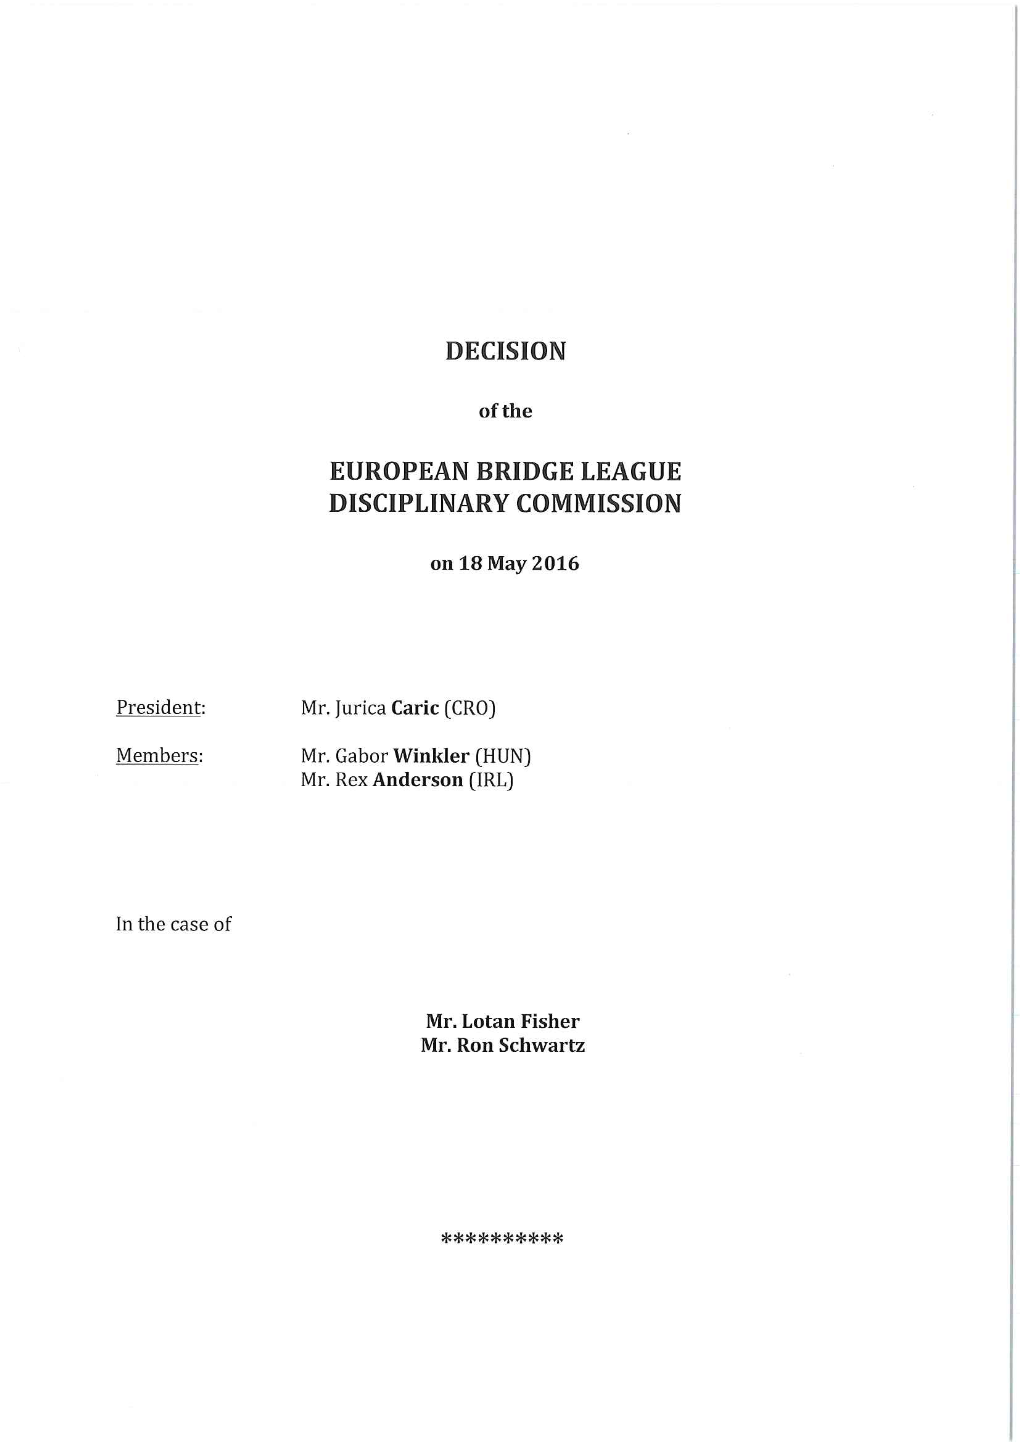 European Bridge League Disciplinary Commission